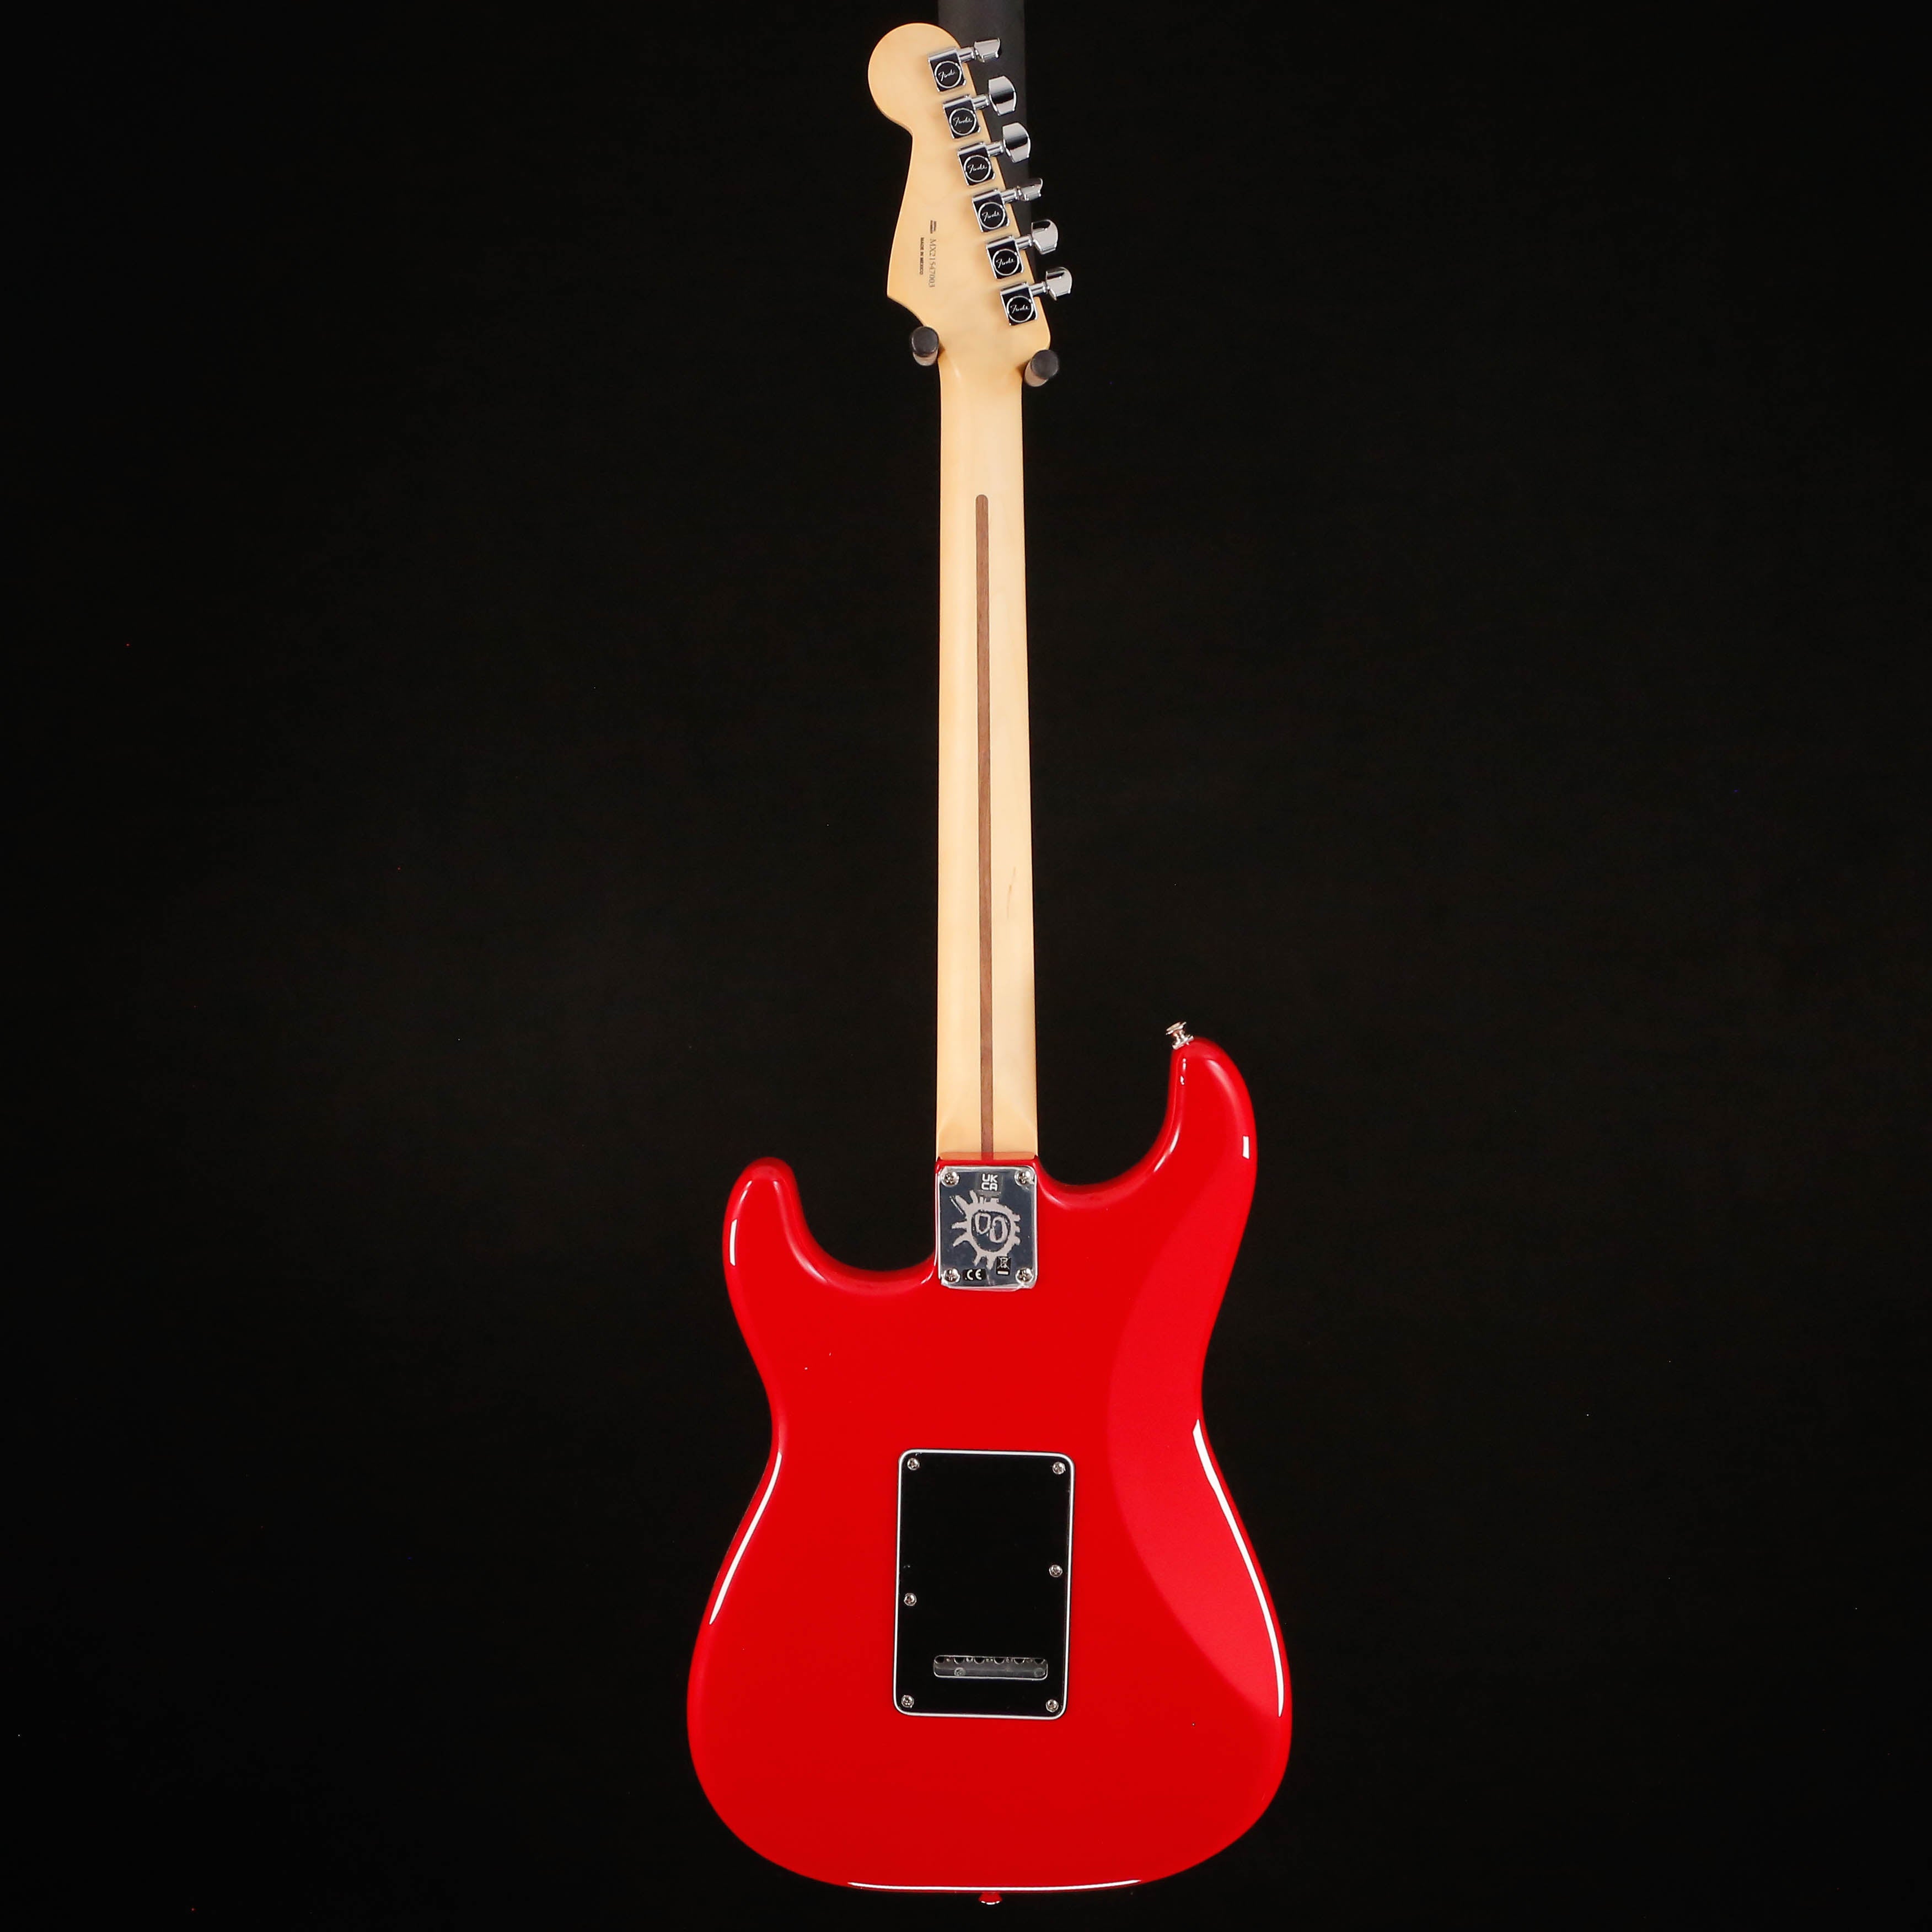 Fender 30th Anniversary Screamadelica Stratocaster Graphic 7lbs 13.8oz